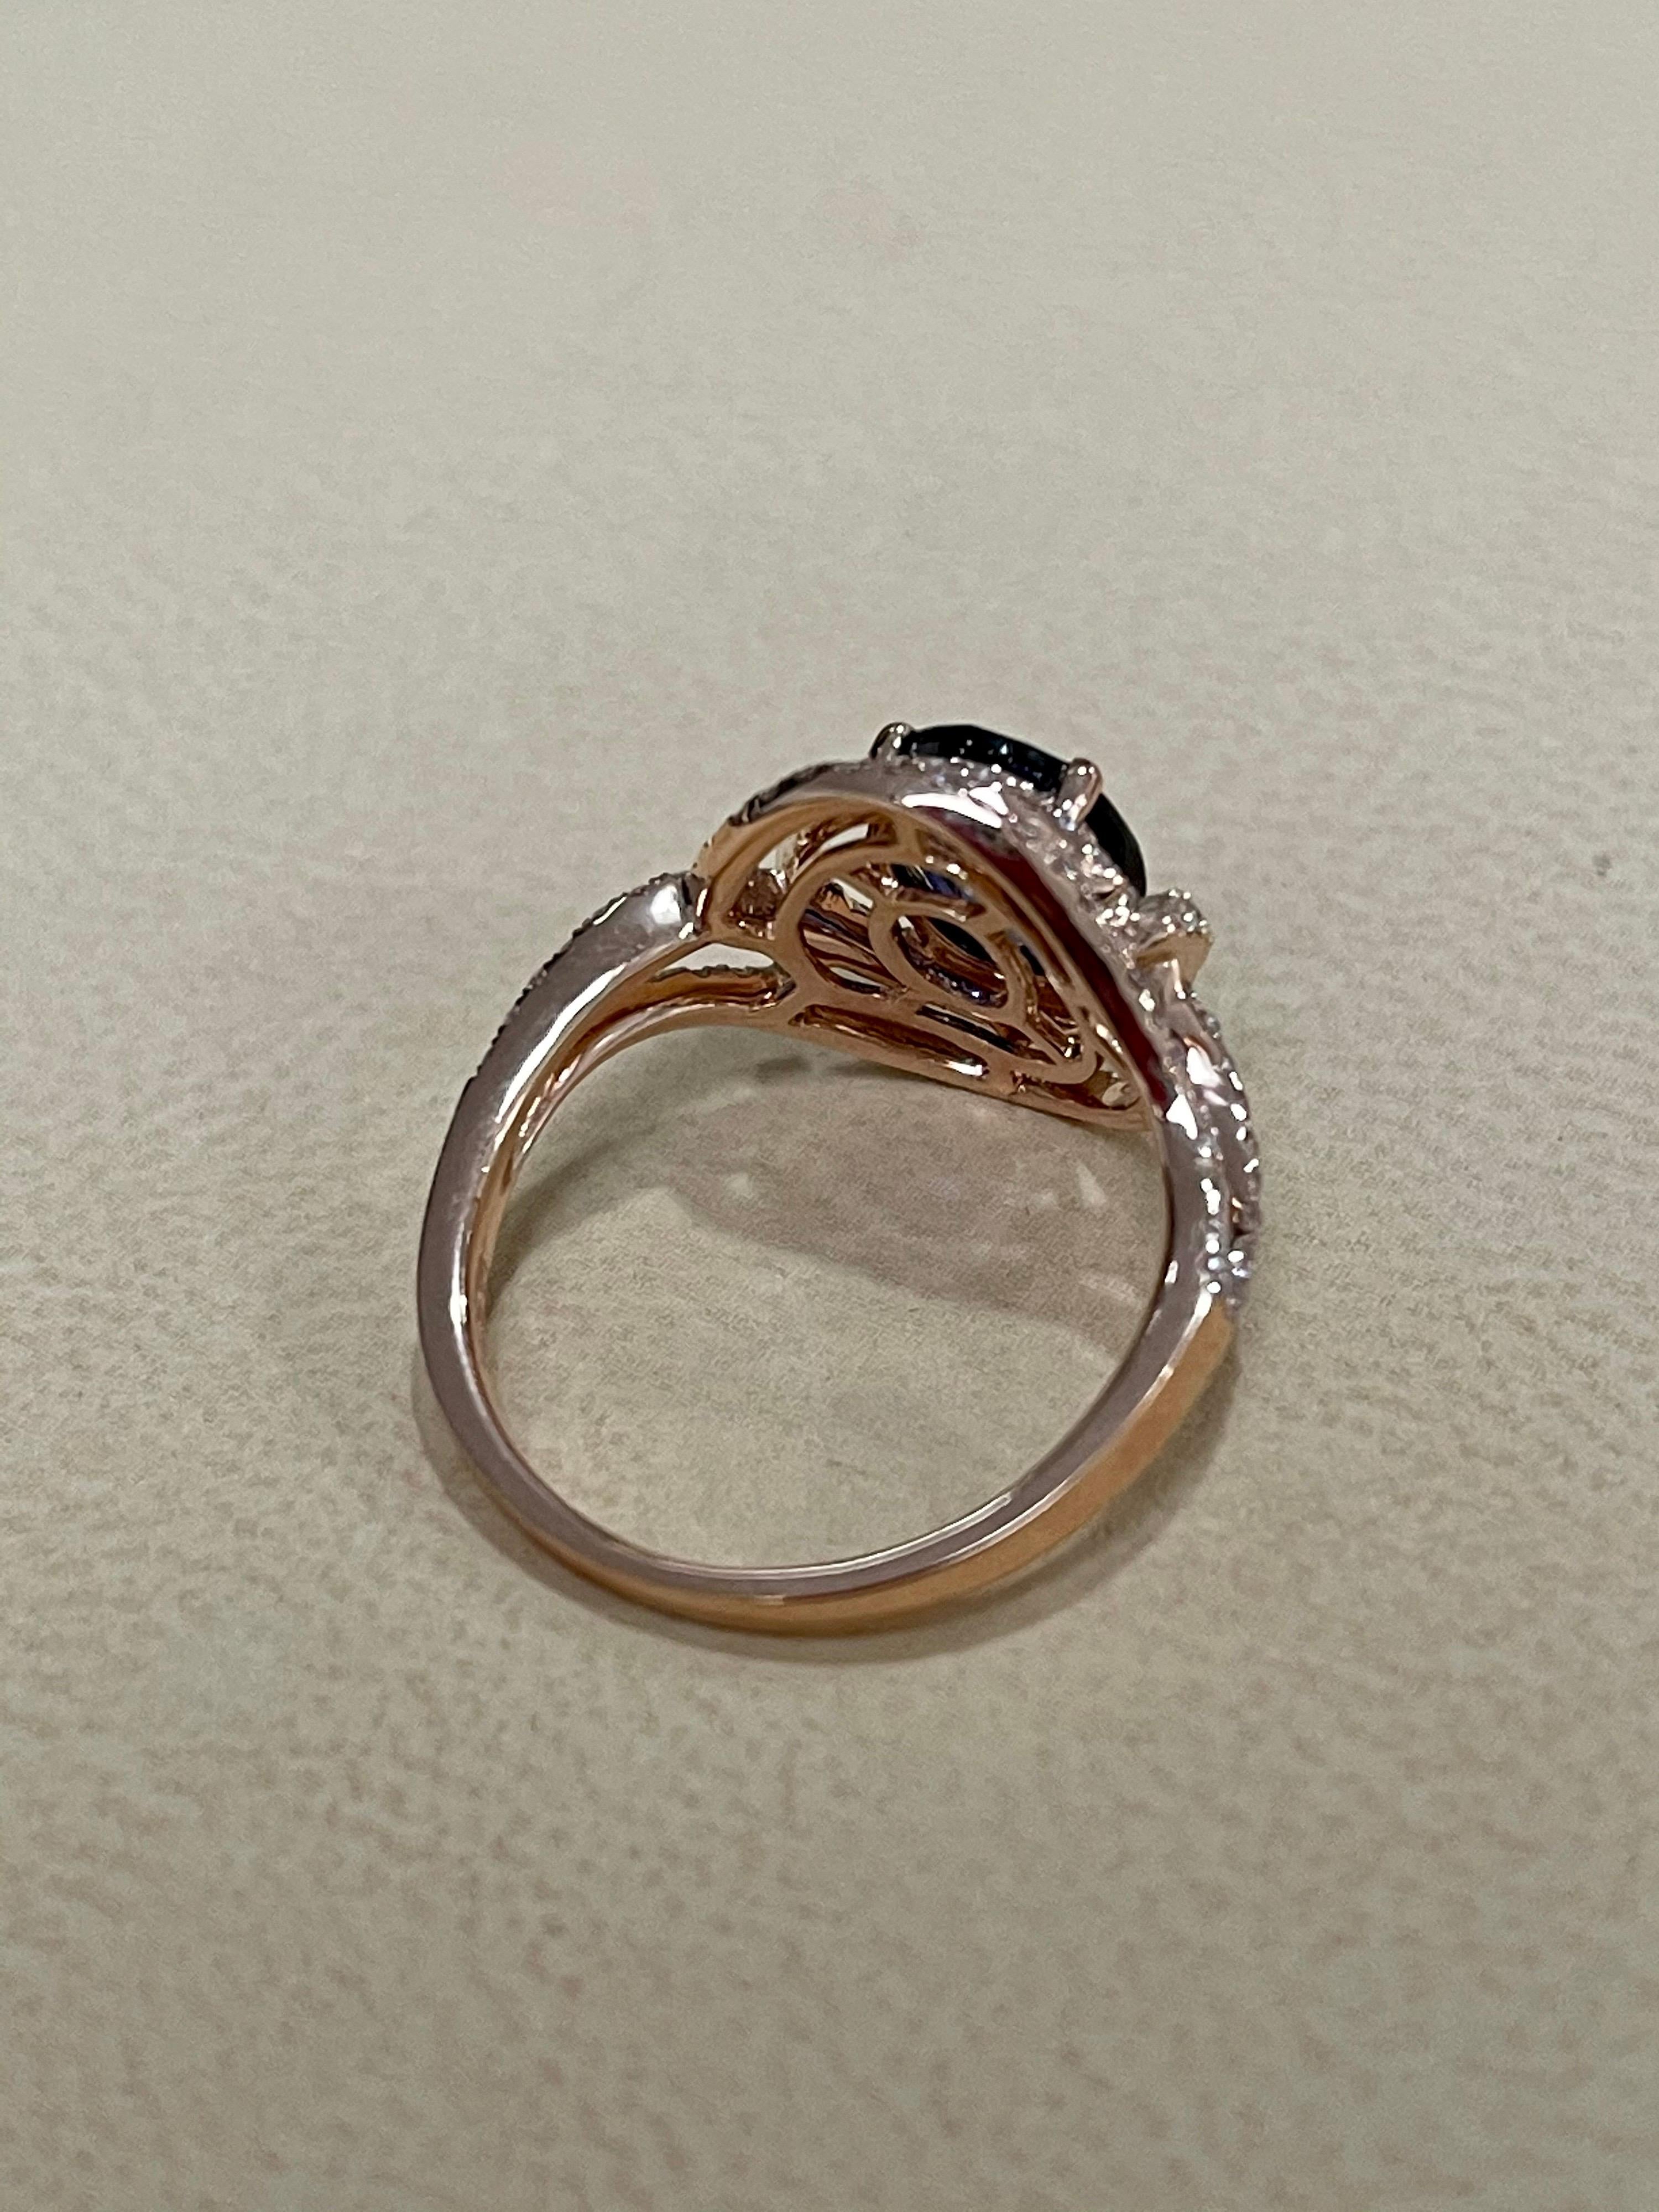 1.9 carat diamond ring